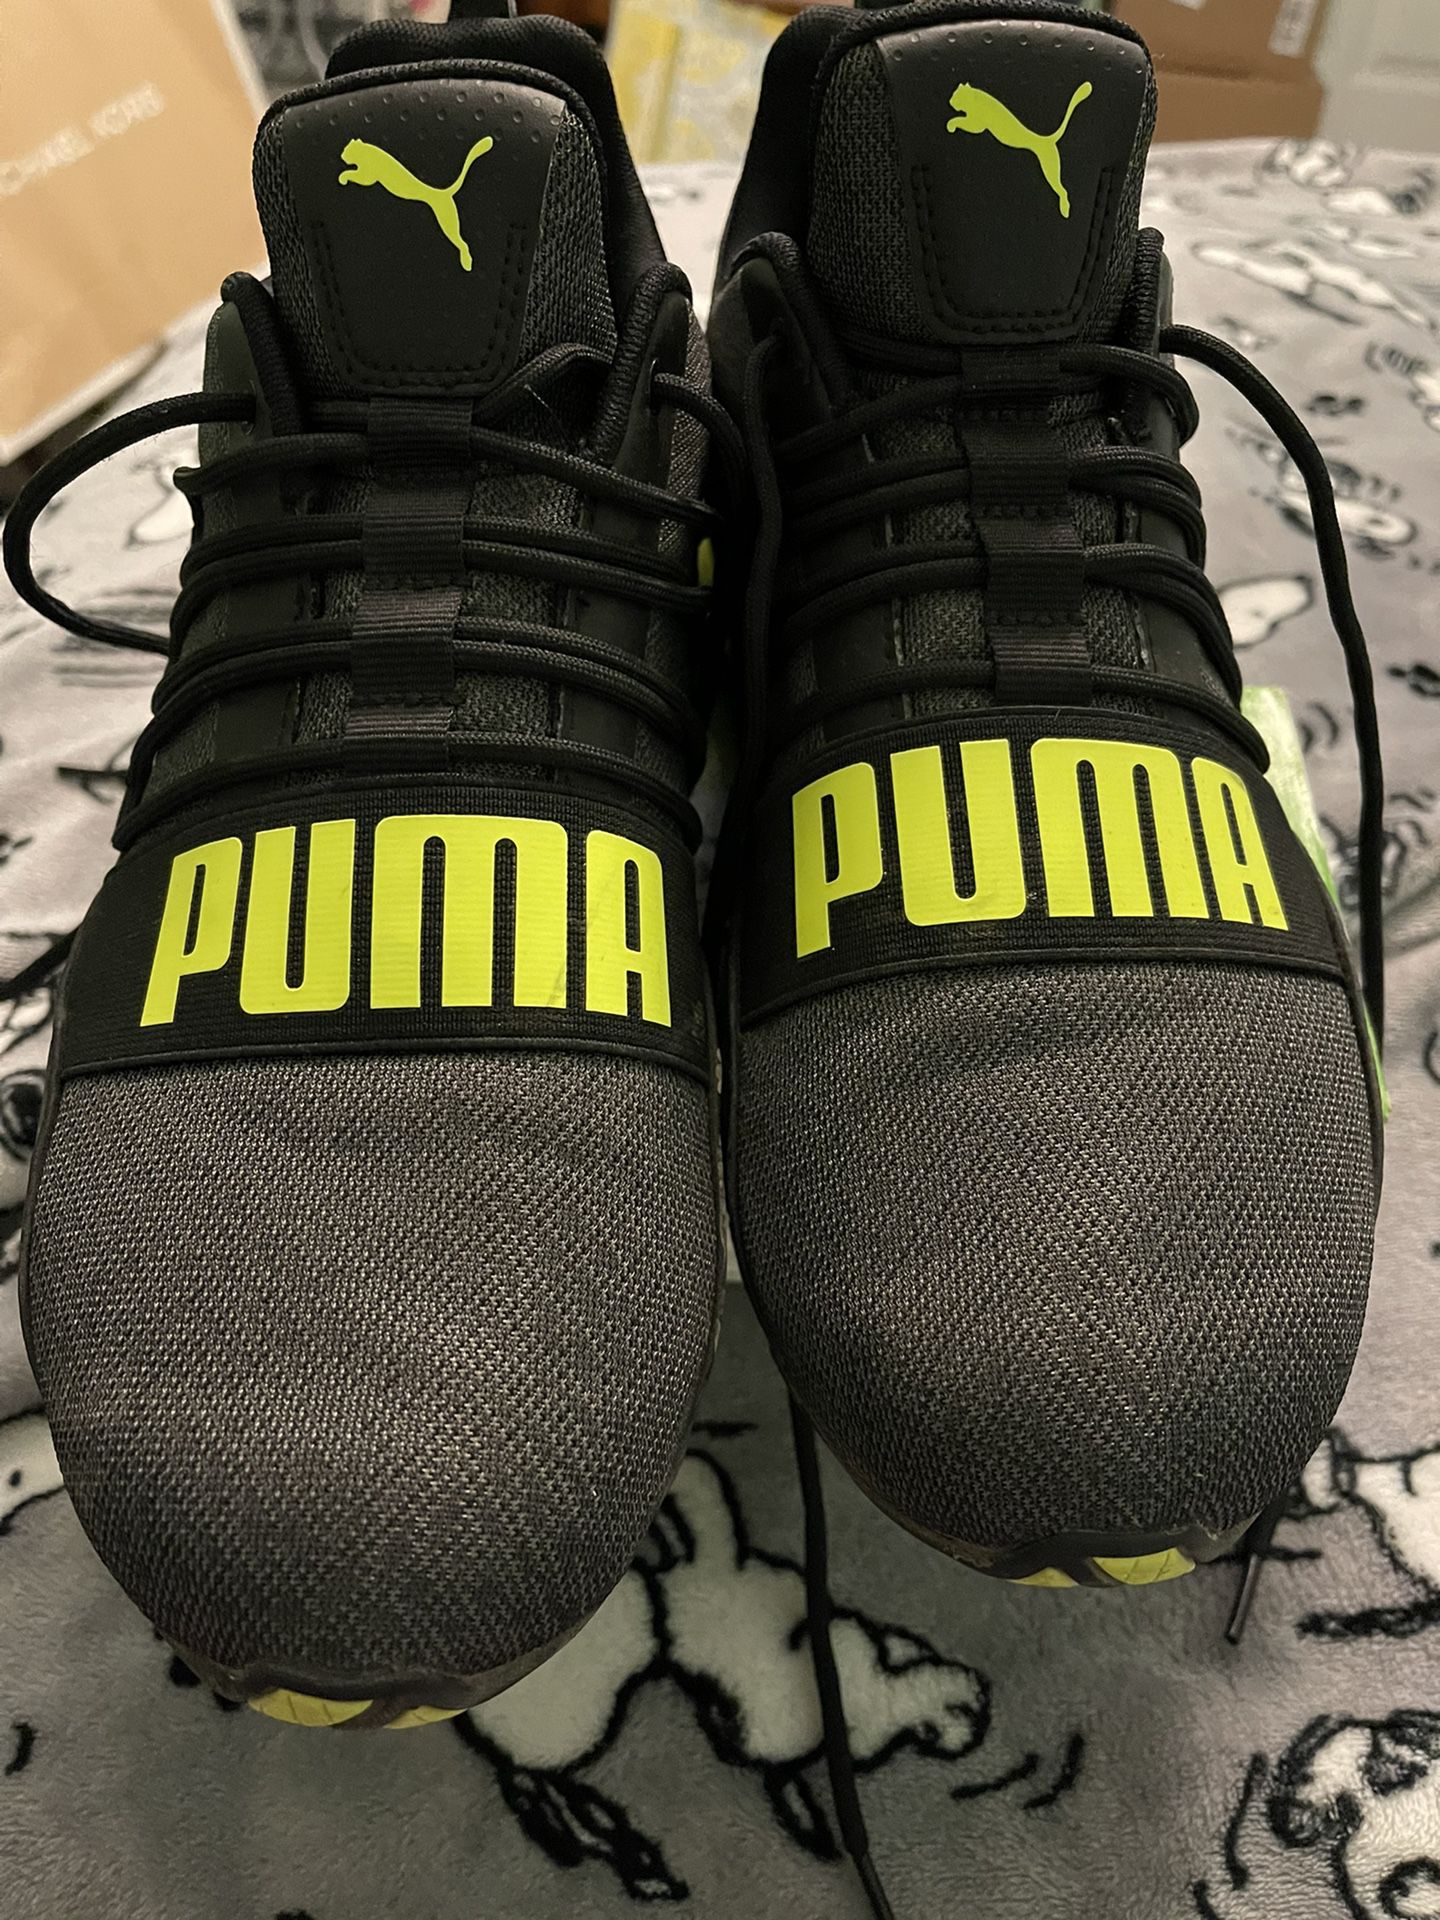 Mens Puma Tennis Shoes for Sale in San Antonio, TX - OfferUp